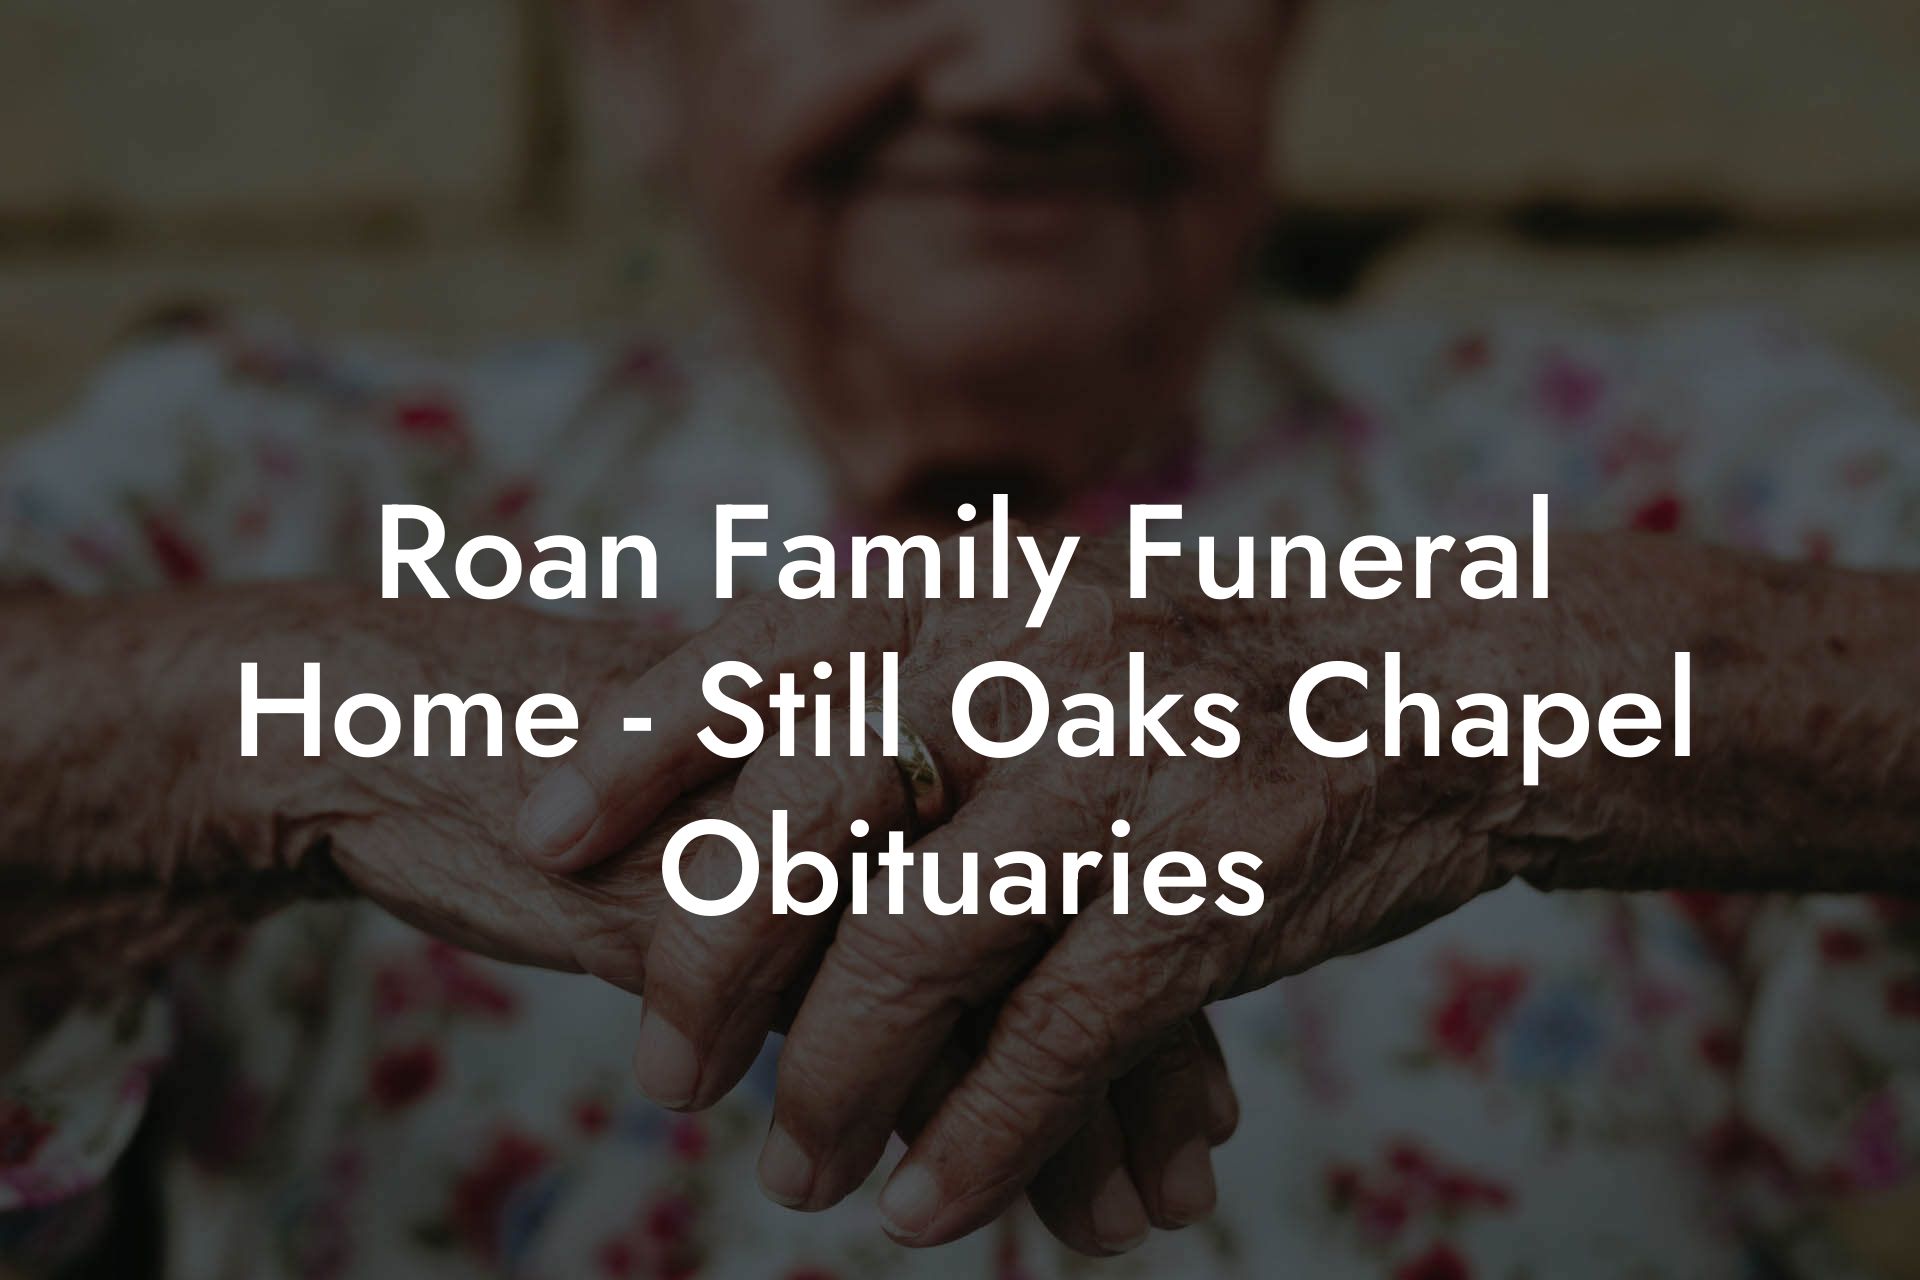 Roan Family Funeral Home - Still Oaks Chapel Obituaries